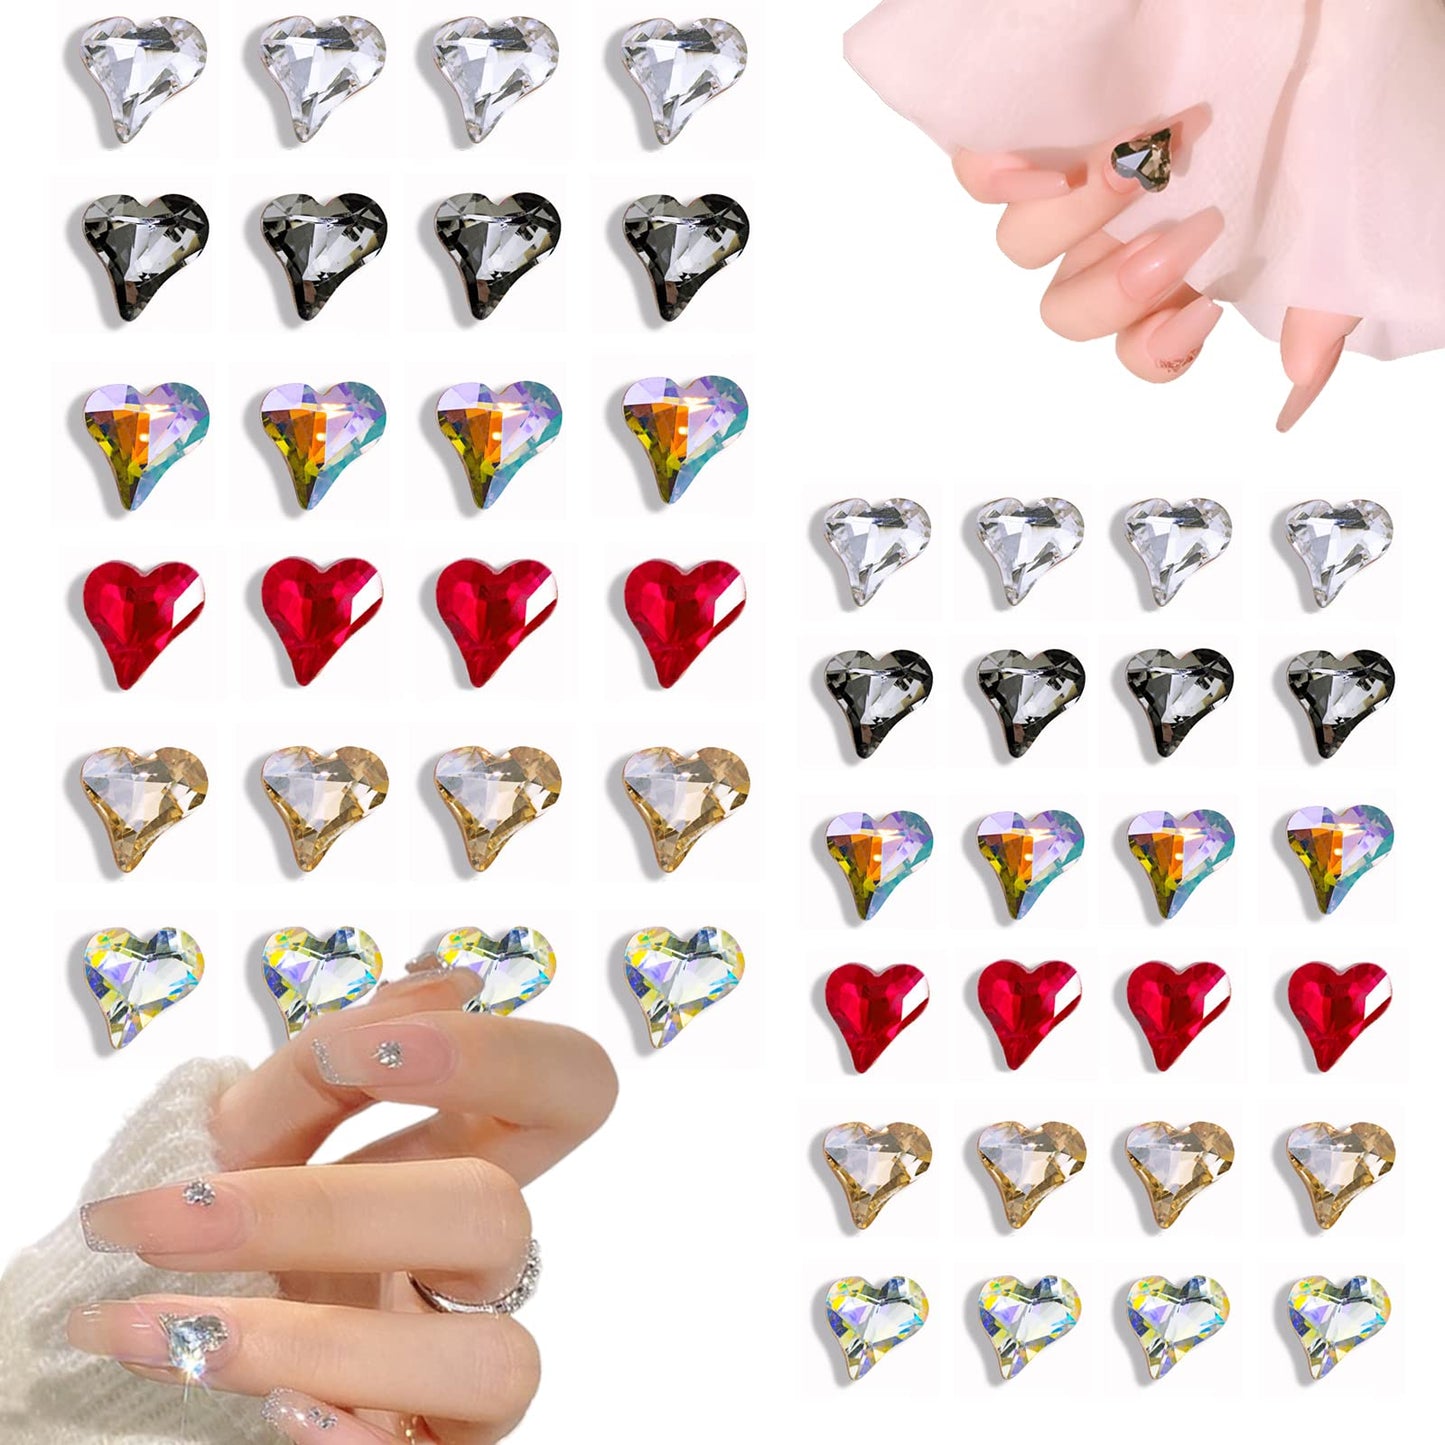 48Pcs Heart Nail Charms, 3D Nail Rhinestones for Acrylic Nails, Peach Heart Charms Nails Art Supplies, Shiny Crystal Diamond Design Gems for Nail Art Designs DIY Accessories Craft